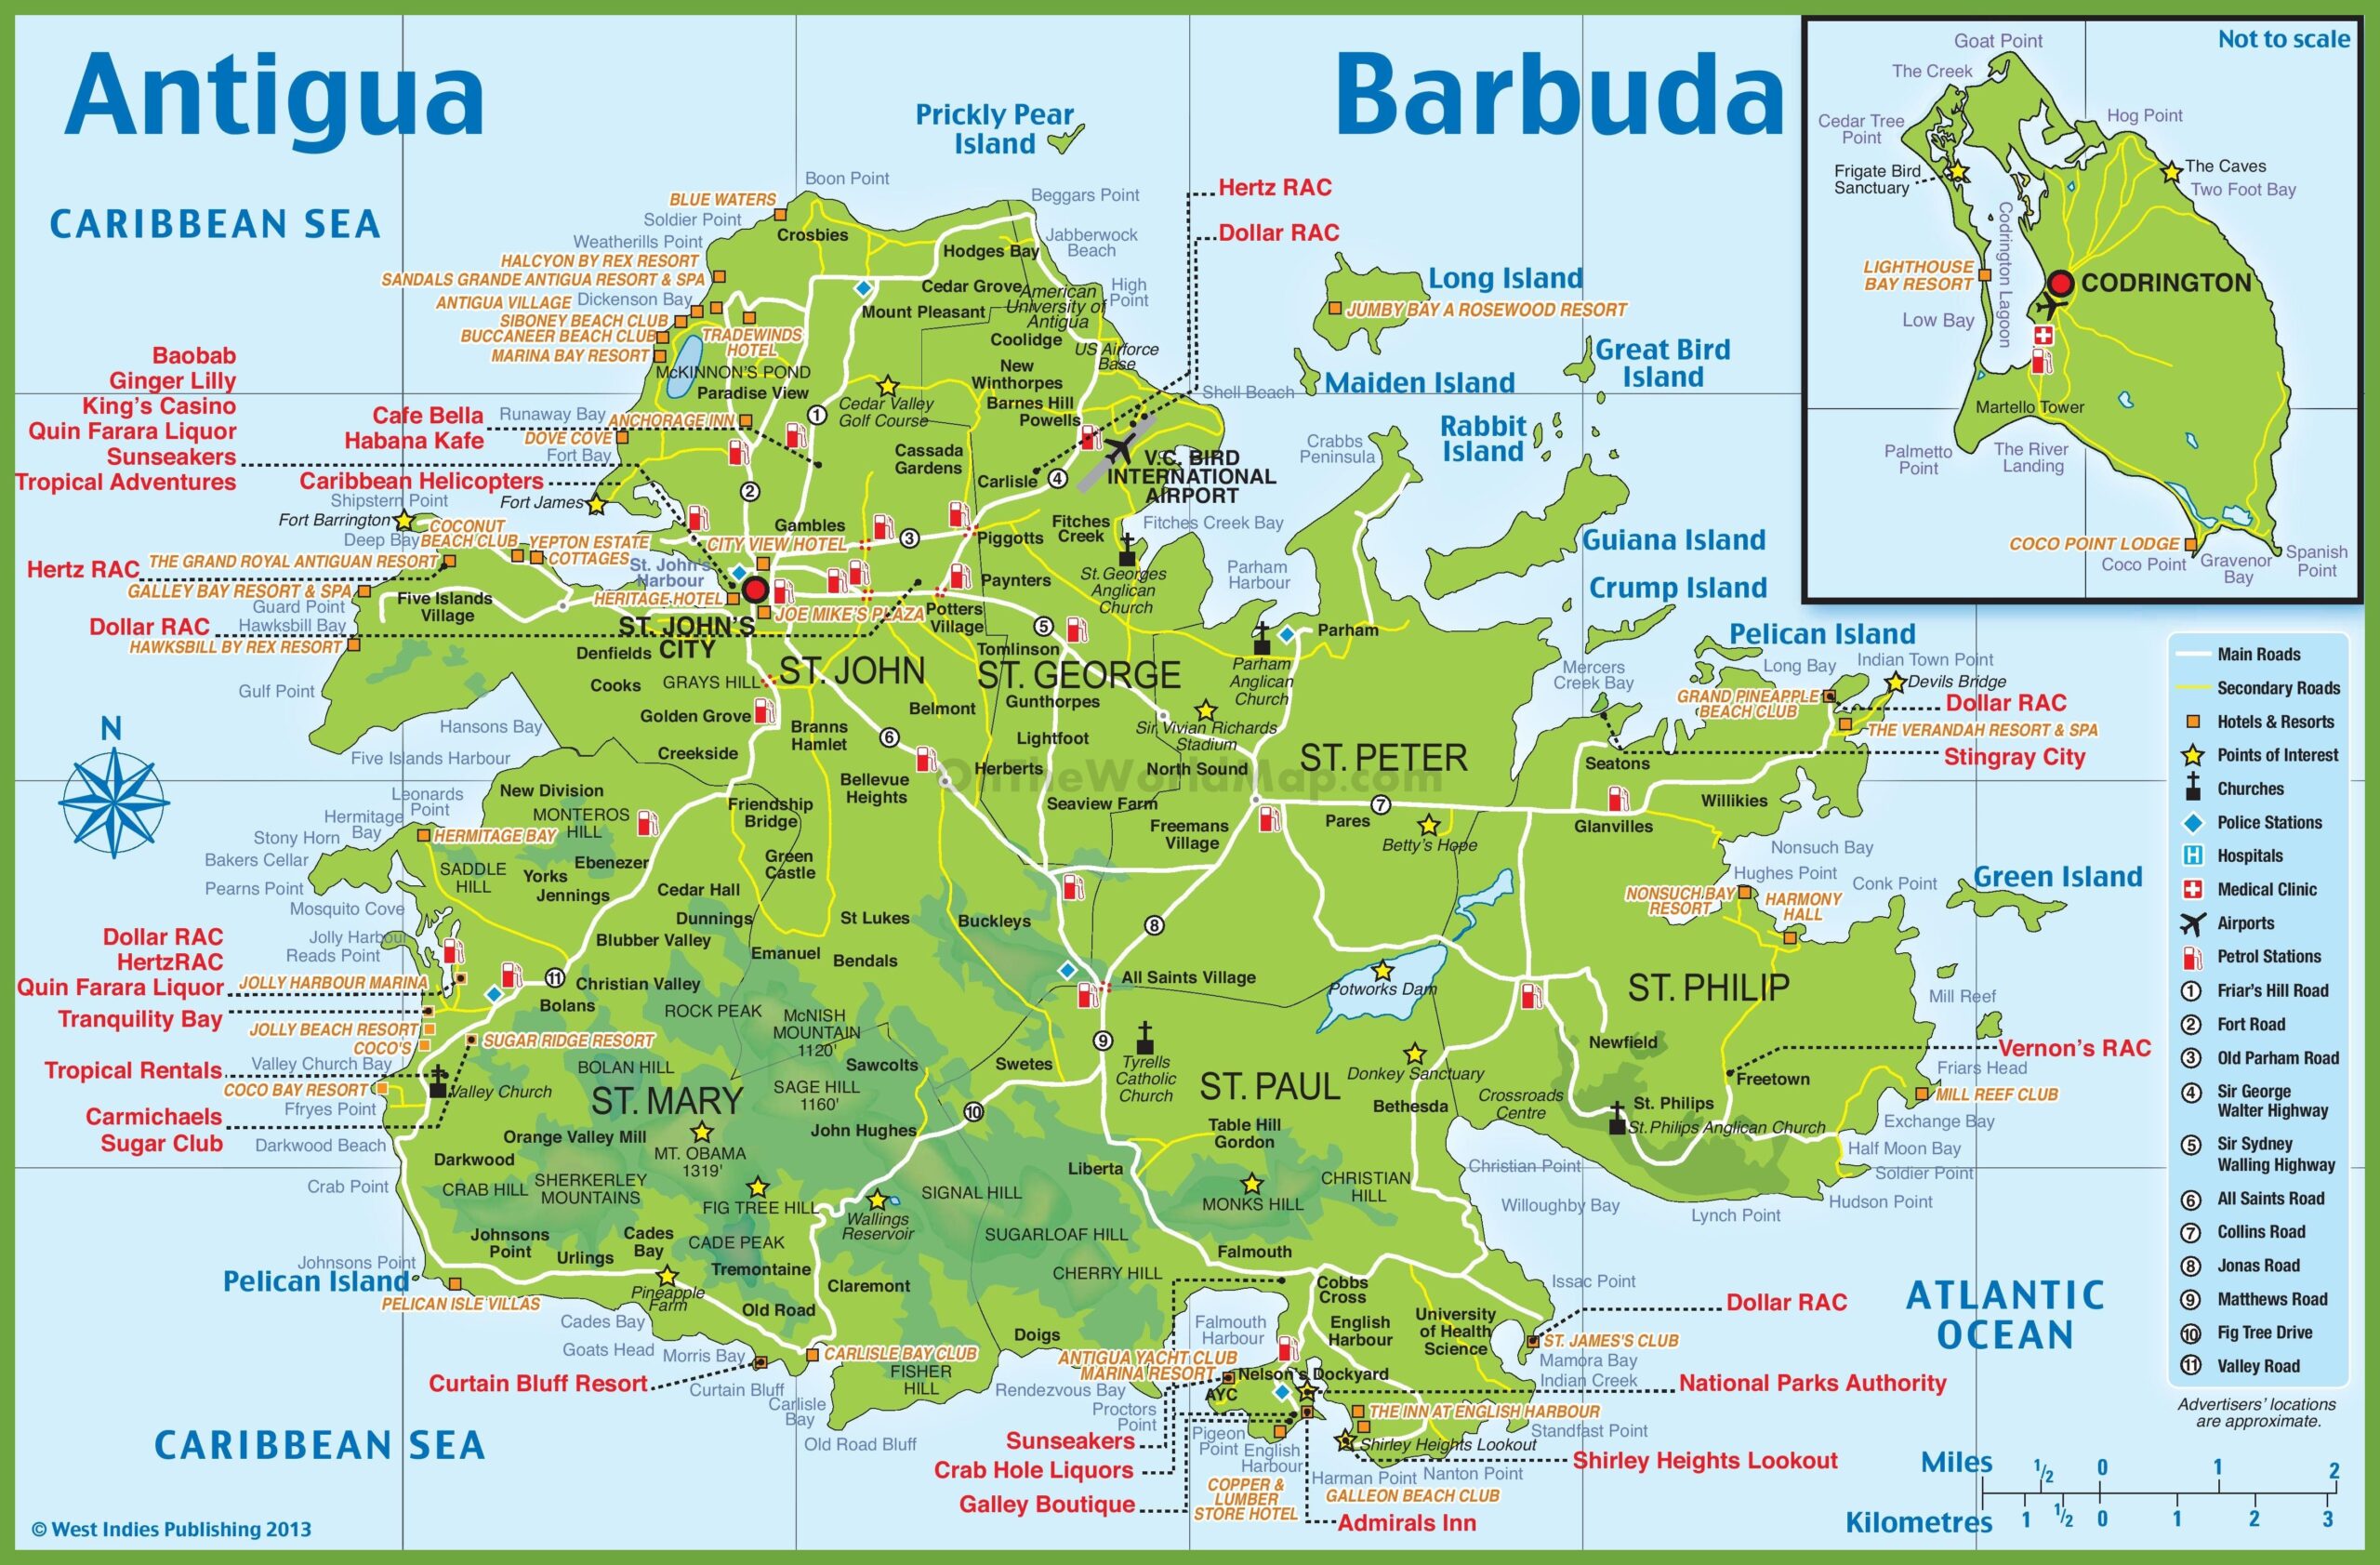 Antigua e Barbuda map.jpg